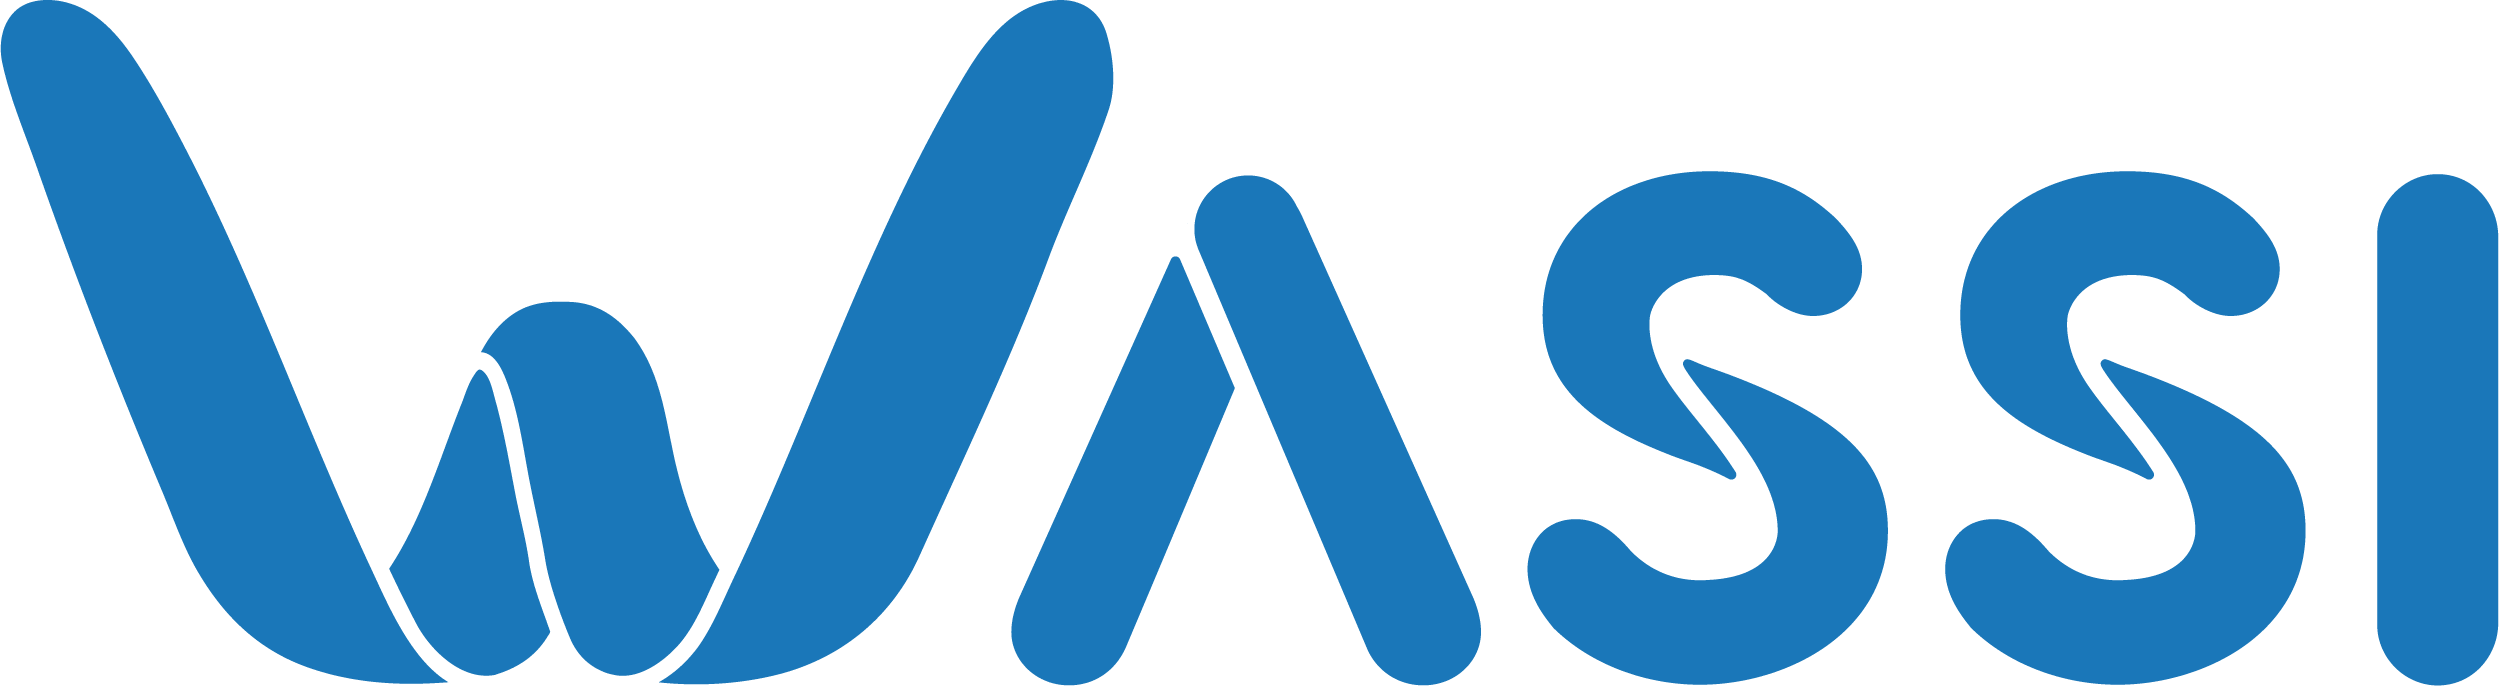 Wassi Logo